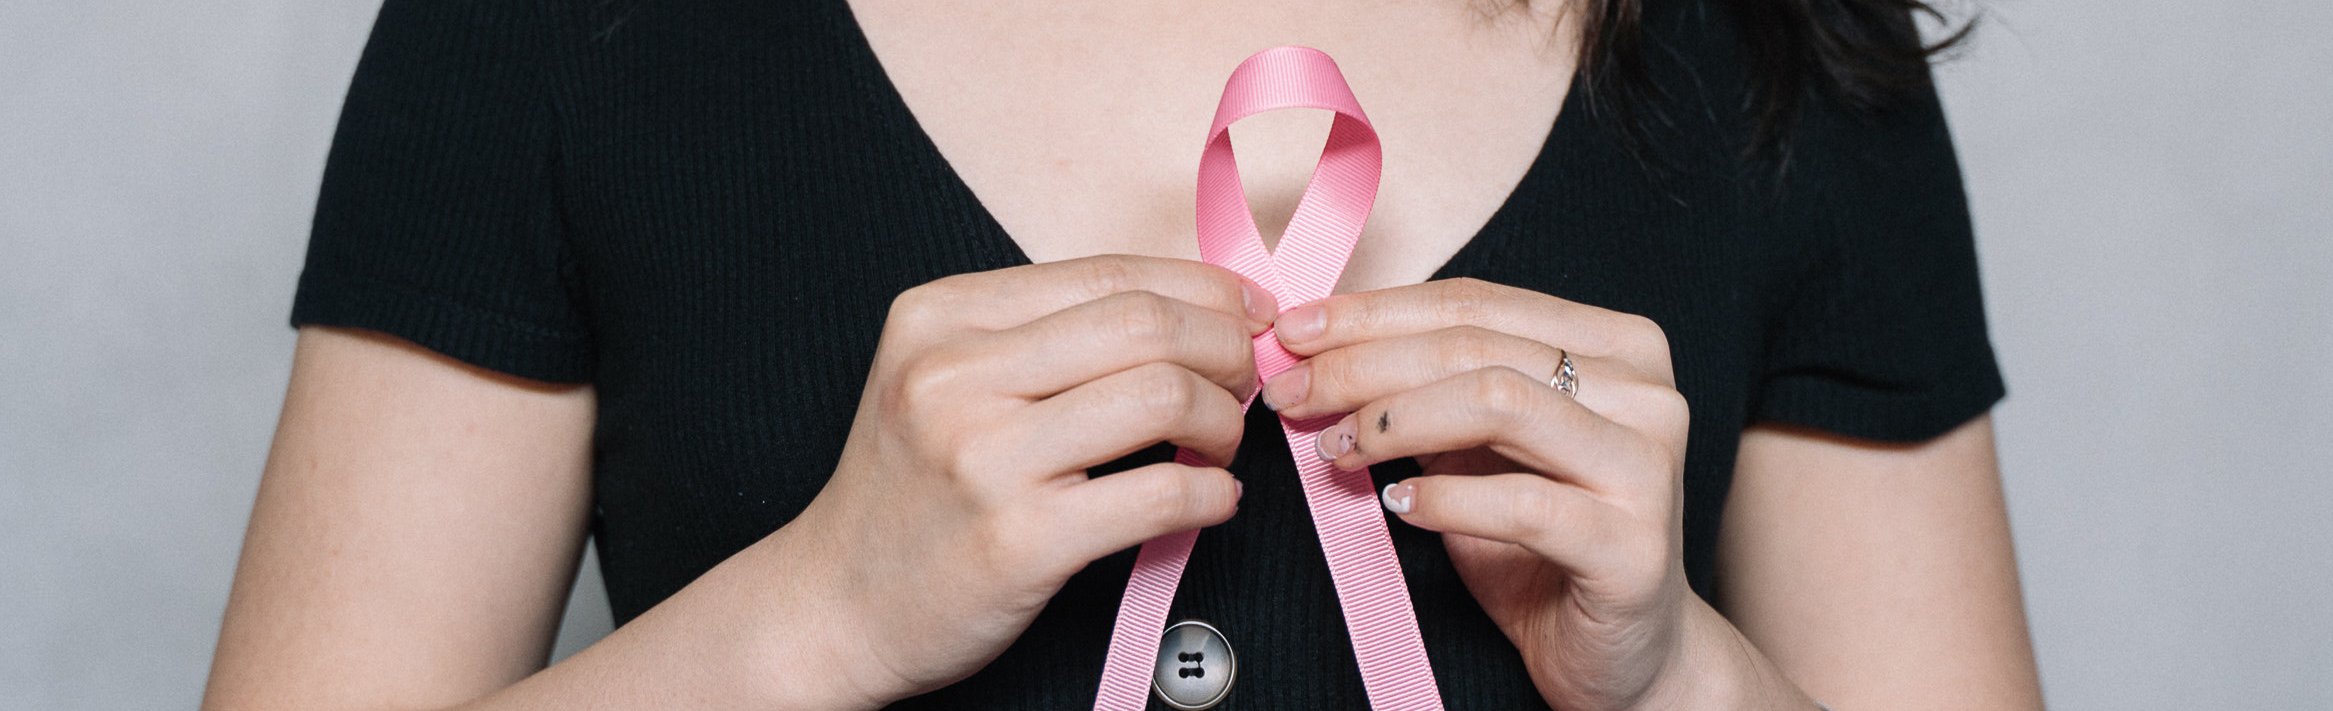 Breast Cancer Awareness Month | CU Cancer Center | Sarah Tevis